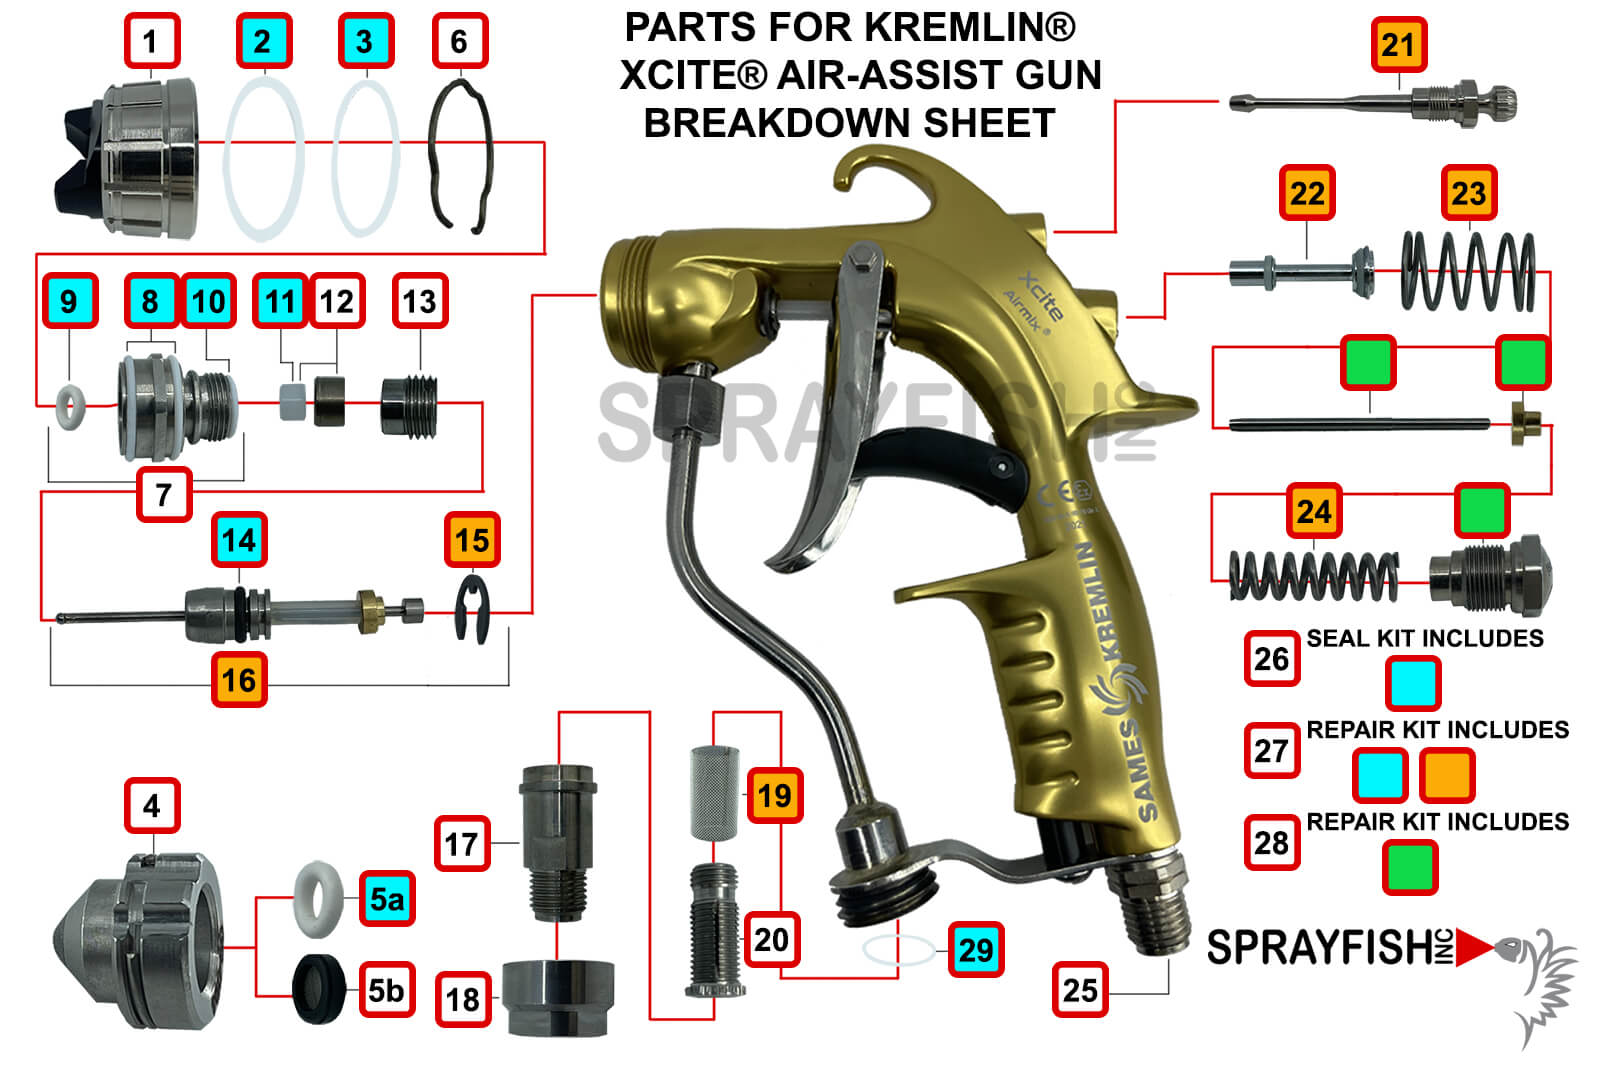 Sprayfish Non-OEM Parts Breakdown Kremlin® Xcite® Air-Assisted Airless Manual Spray Gun